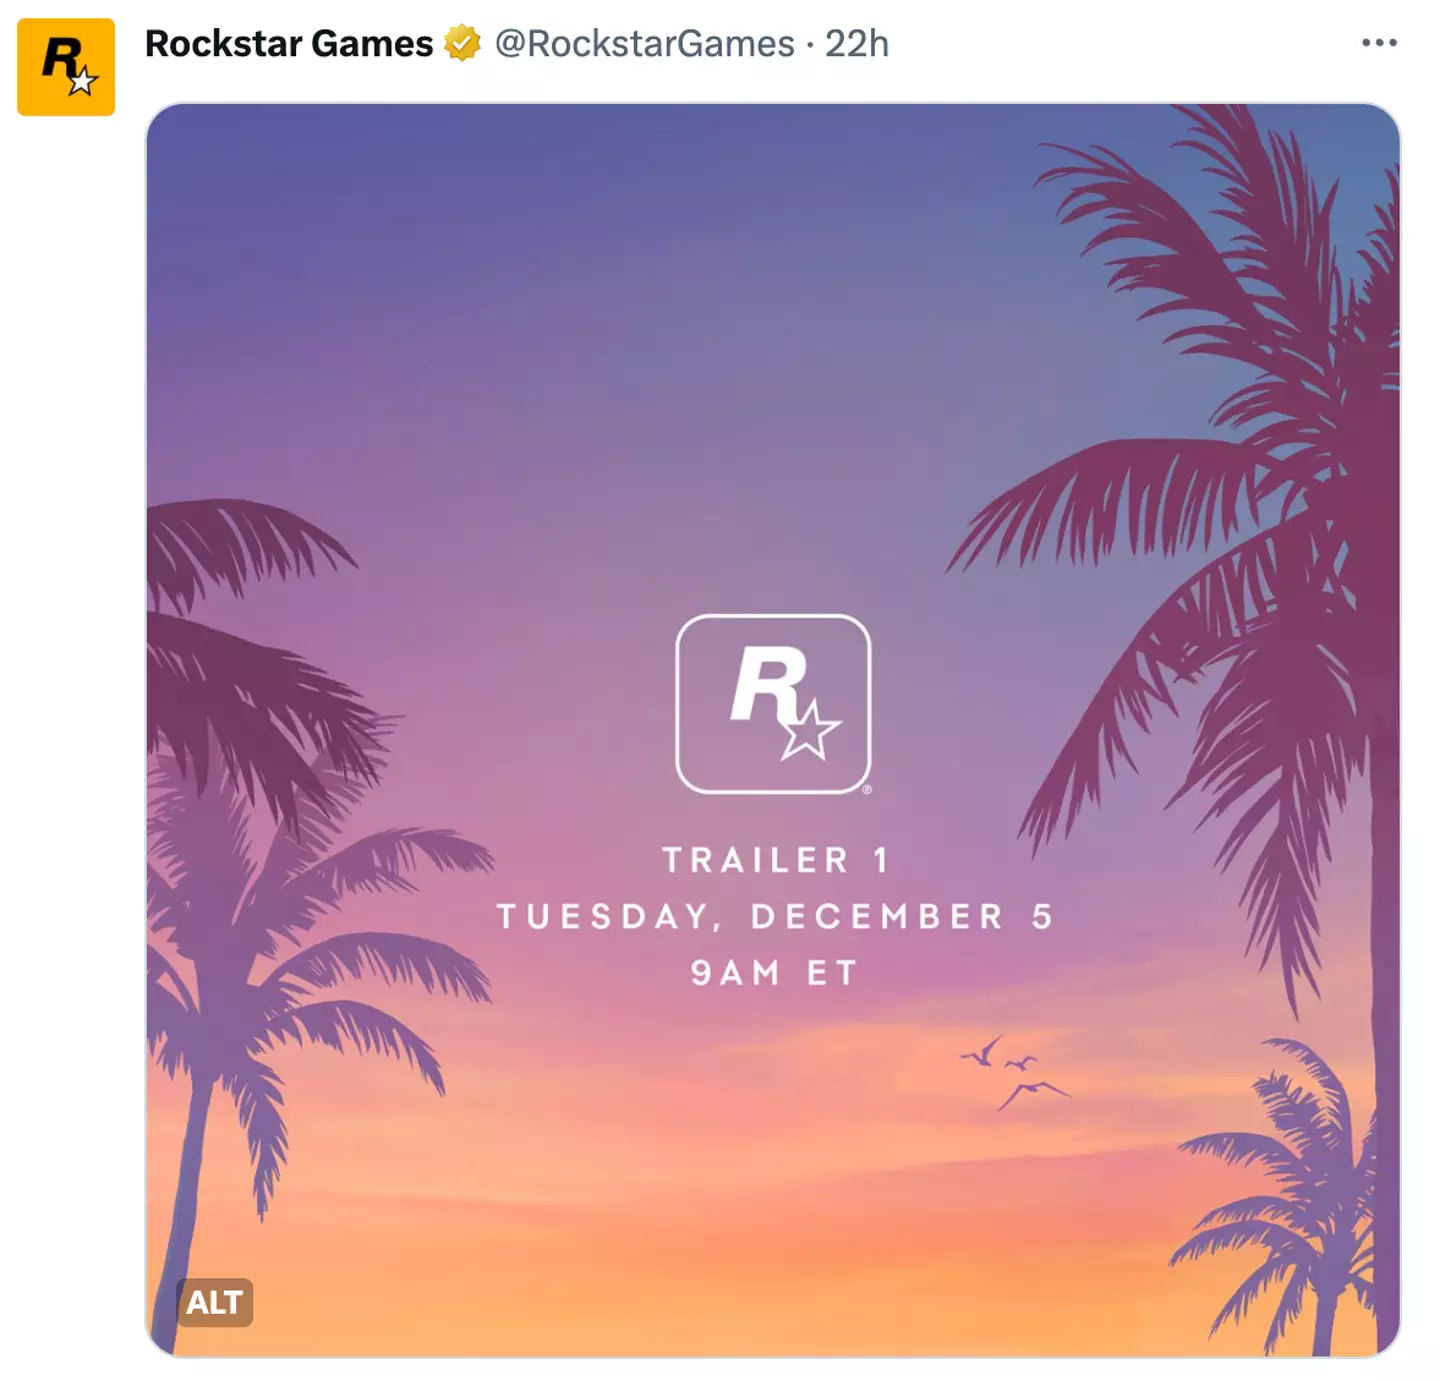 Rockstar Games confirmed the trailer release earlier this week.